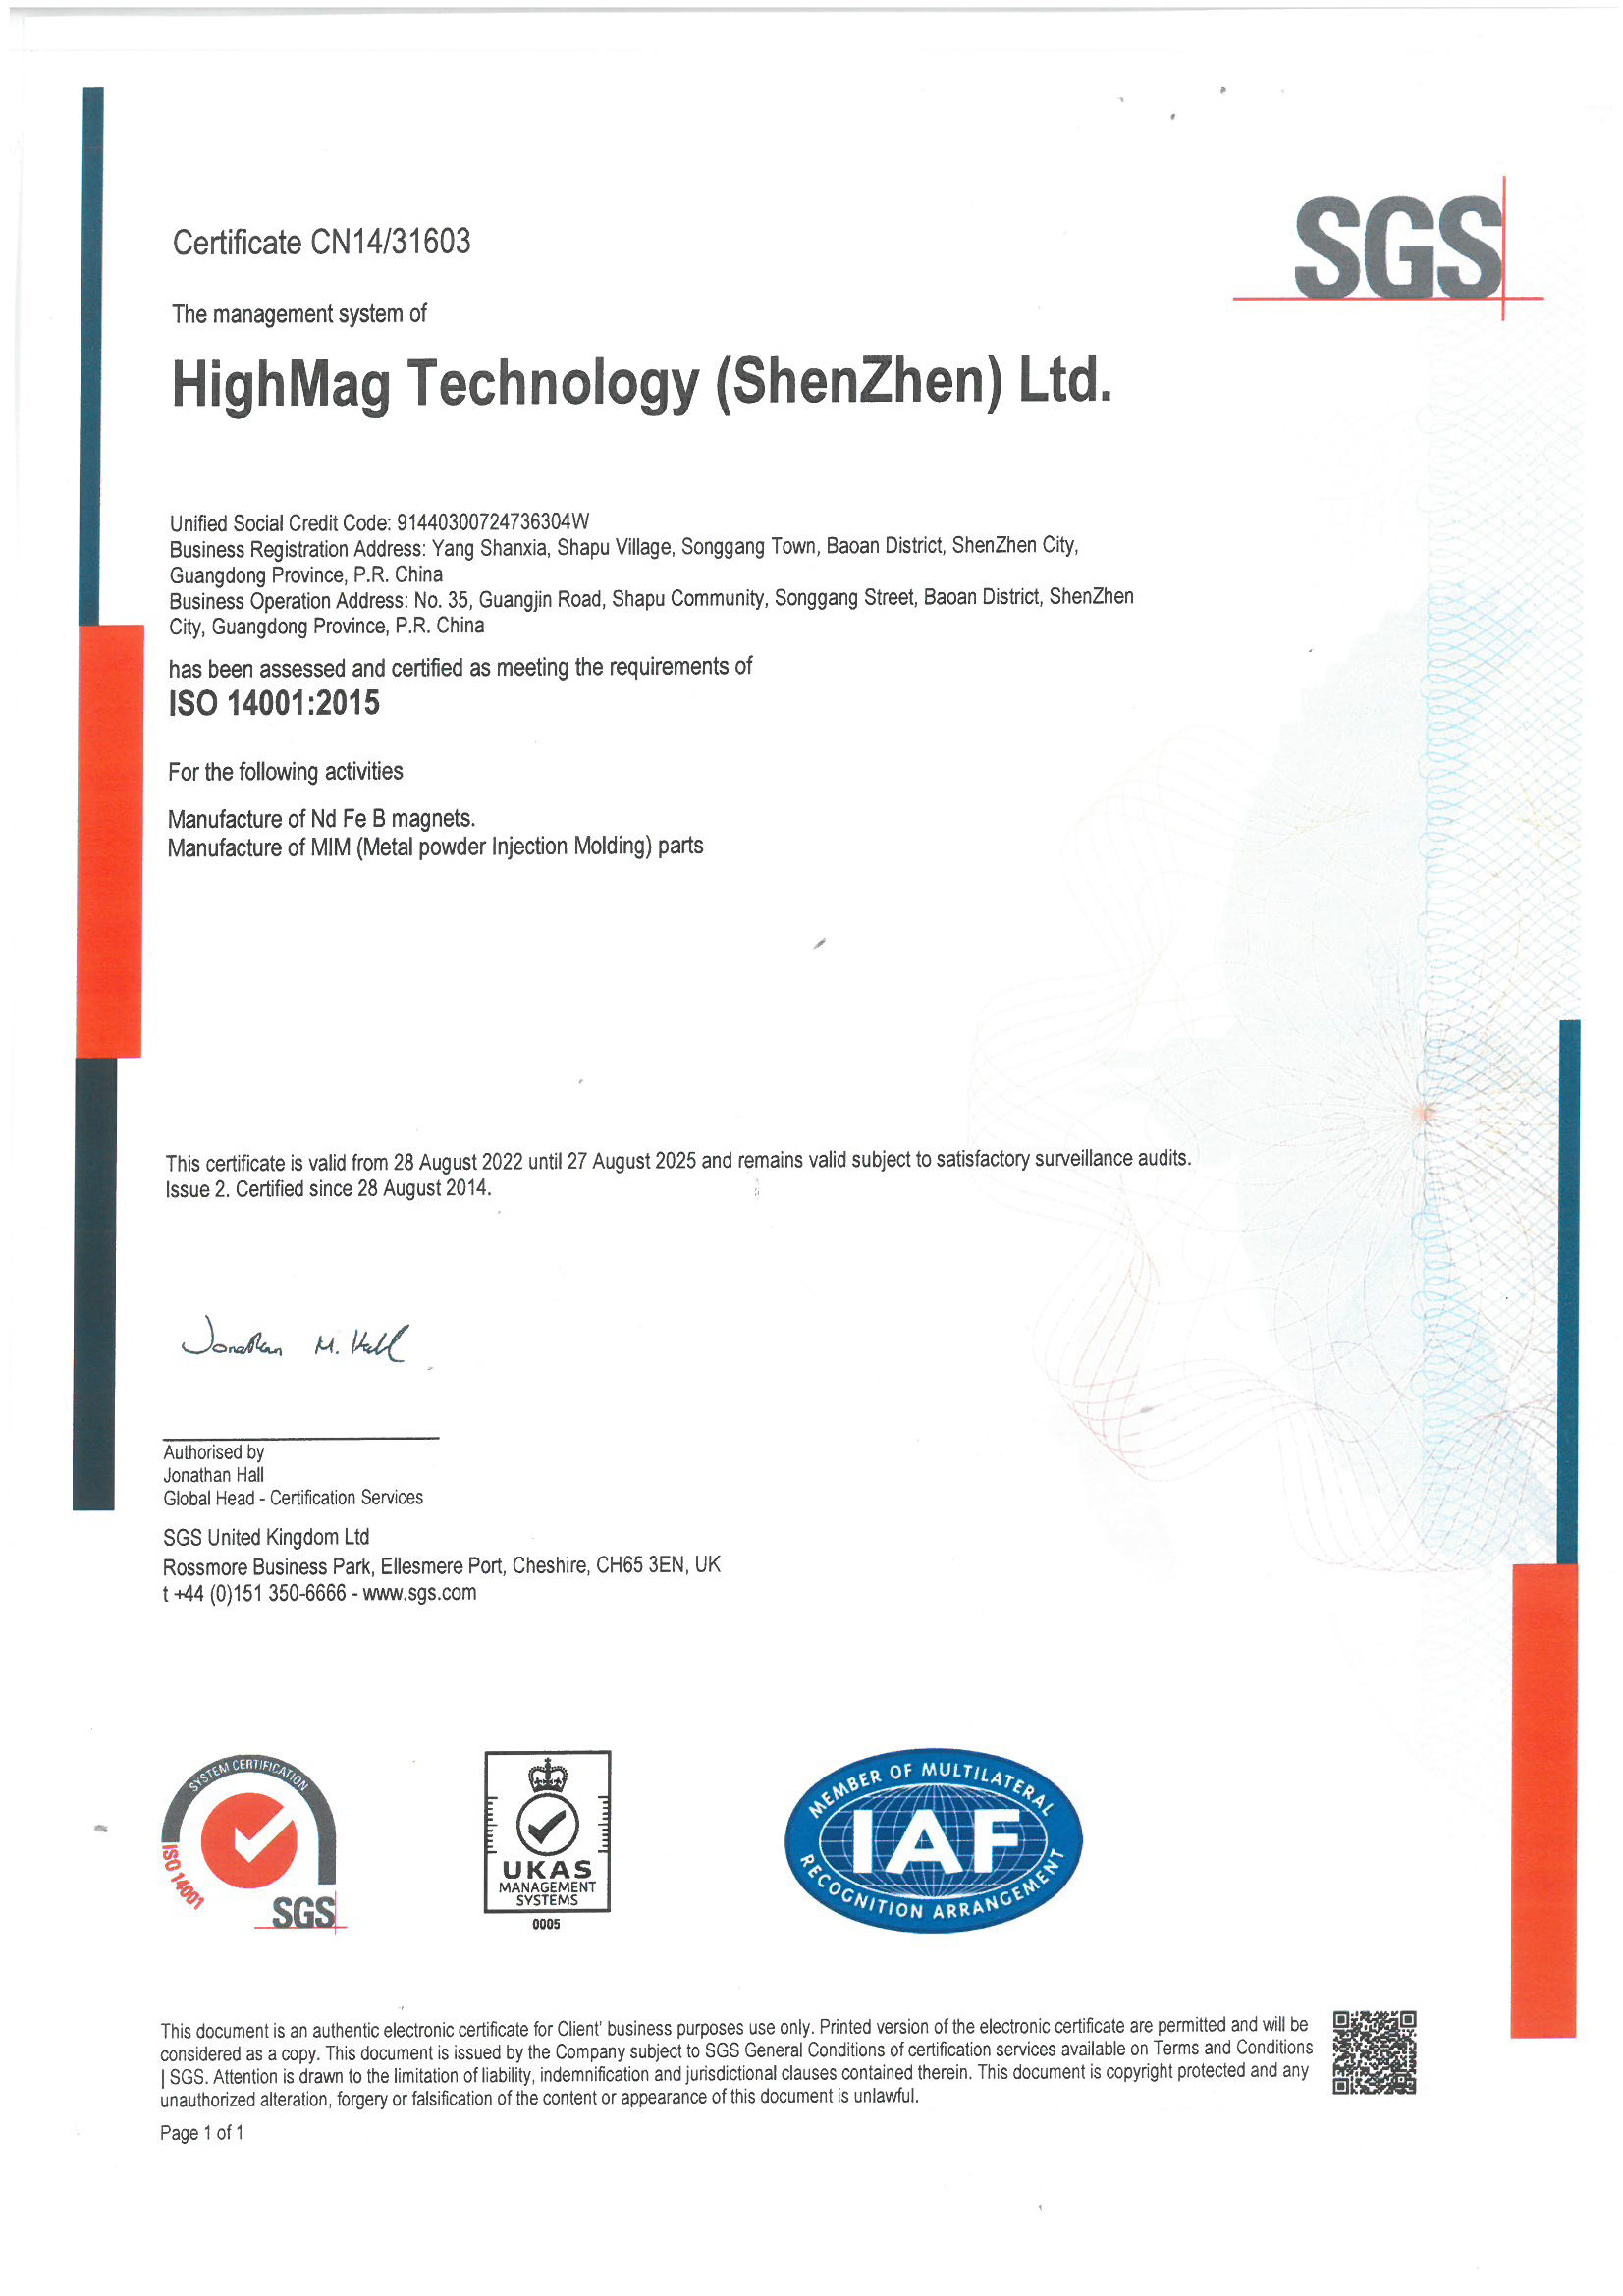 CERTIFICATE OF HIMEG ISO 14001 2015 SYSTEM